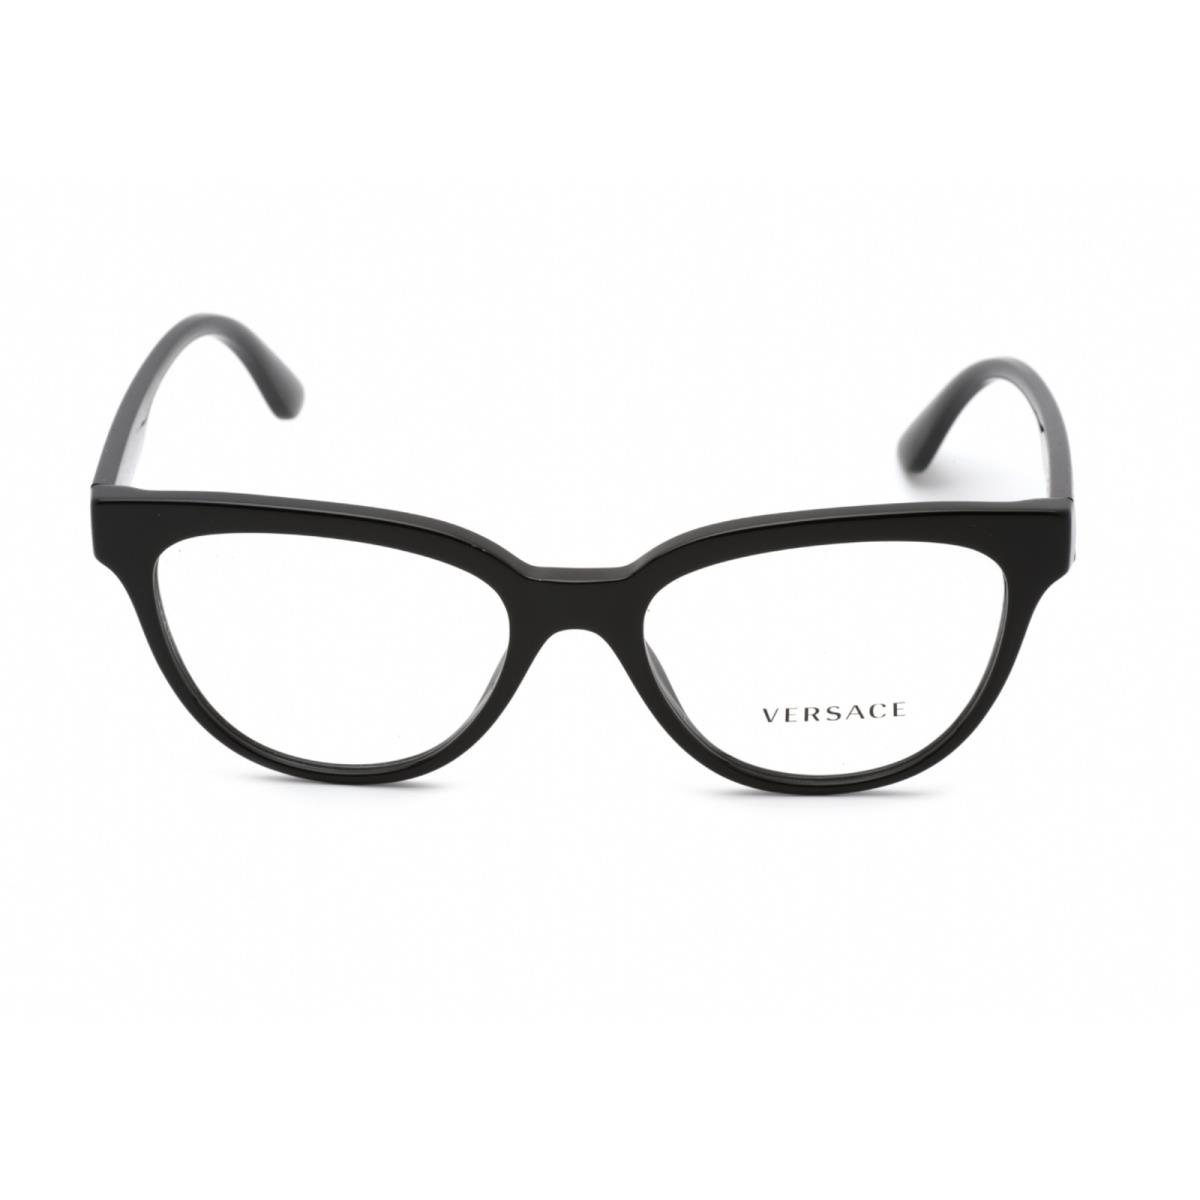 Versace VE 3315 GB1 Eyeglasses Black Frame 54mm